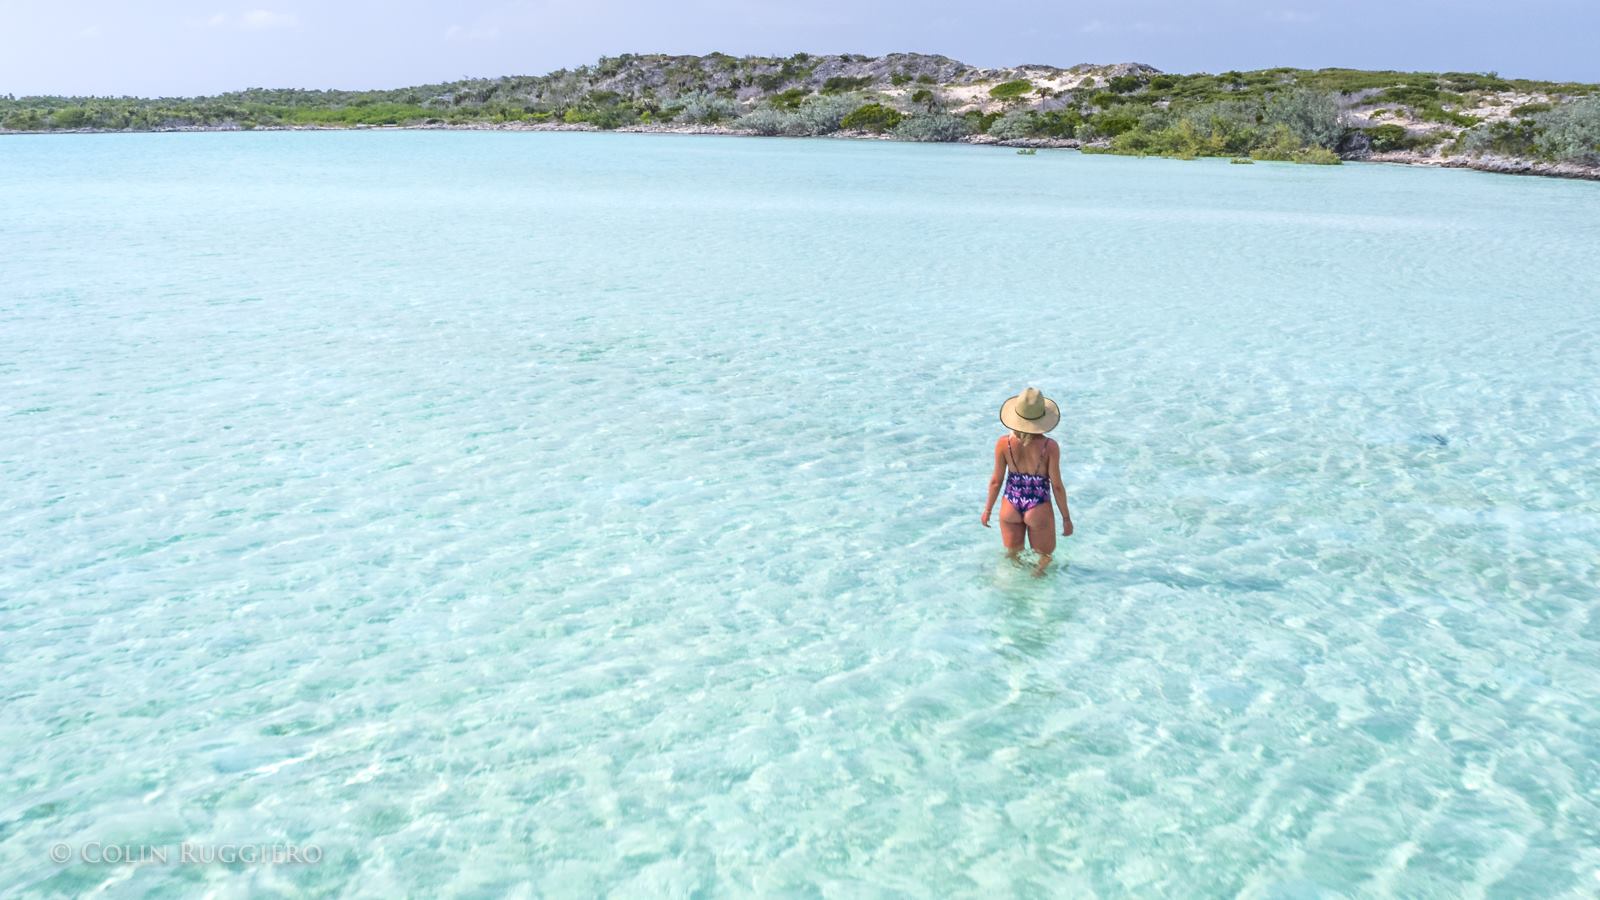 Stunning beauty, Exuma, The Bahamas | Credit: Colin Ruggiero